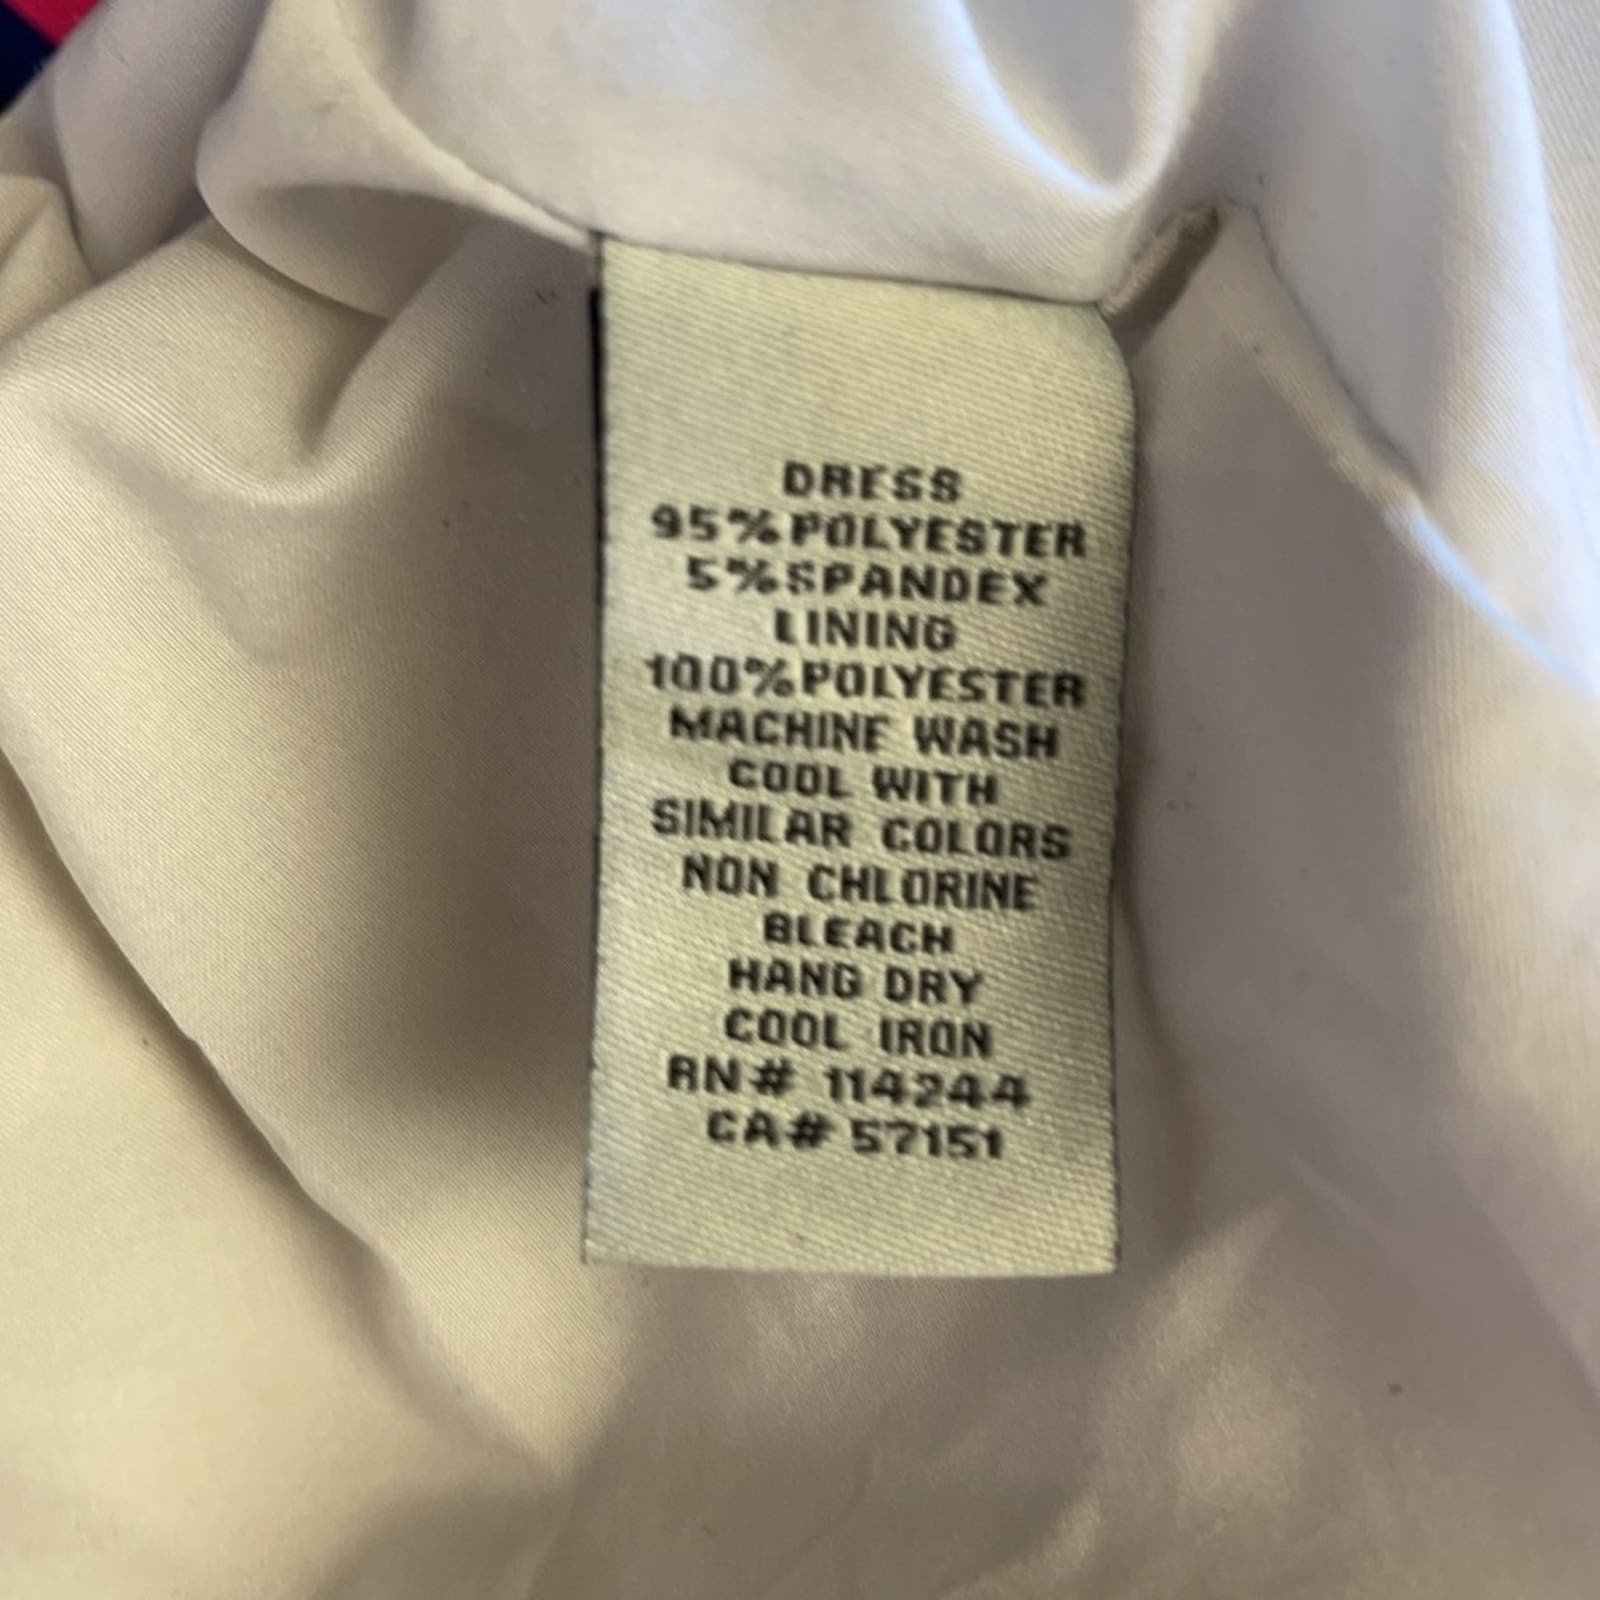 Authentic Eliza J Fuchsia Navy White Geometric Print Shift Dress Size 4 IxyQKCk9g Cheap